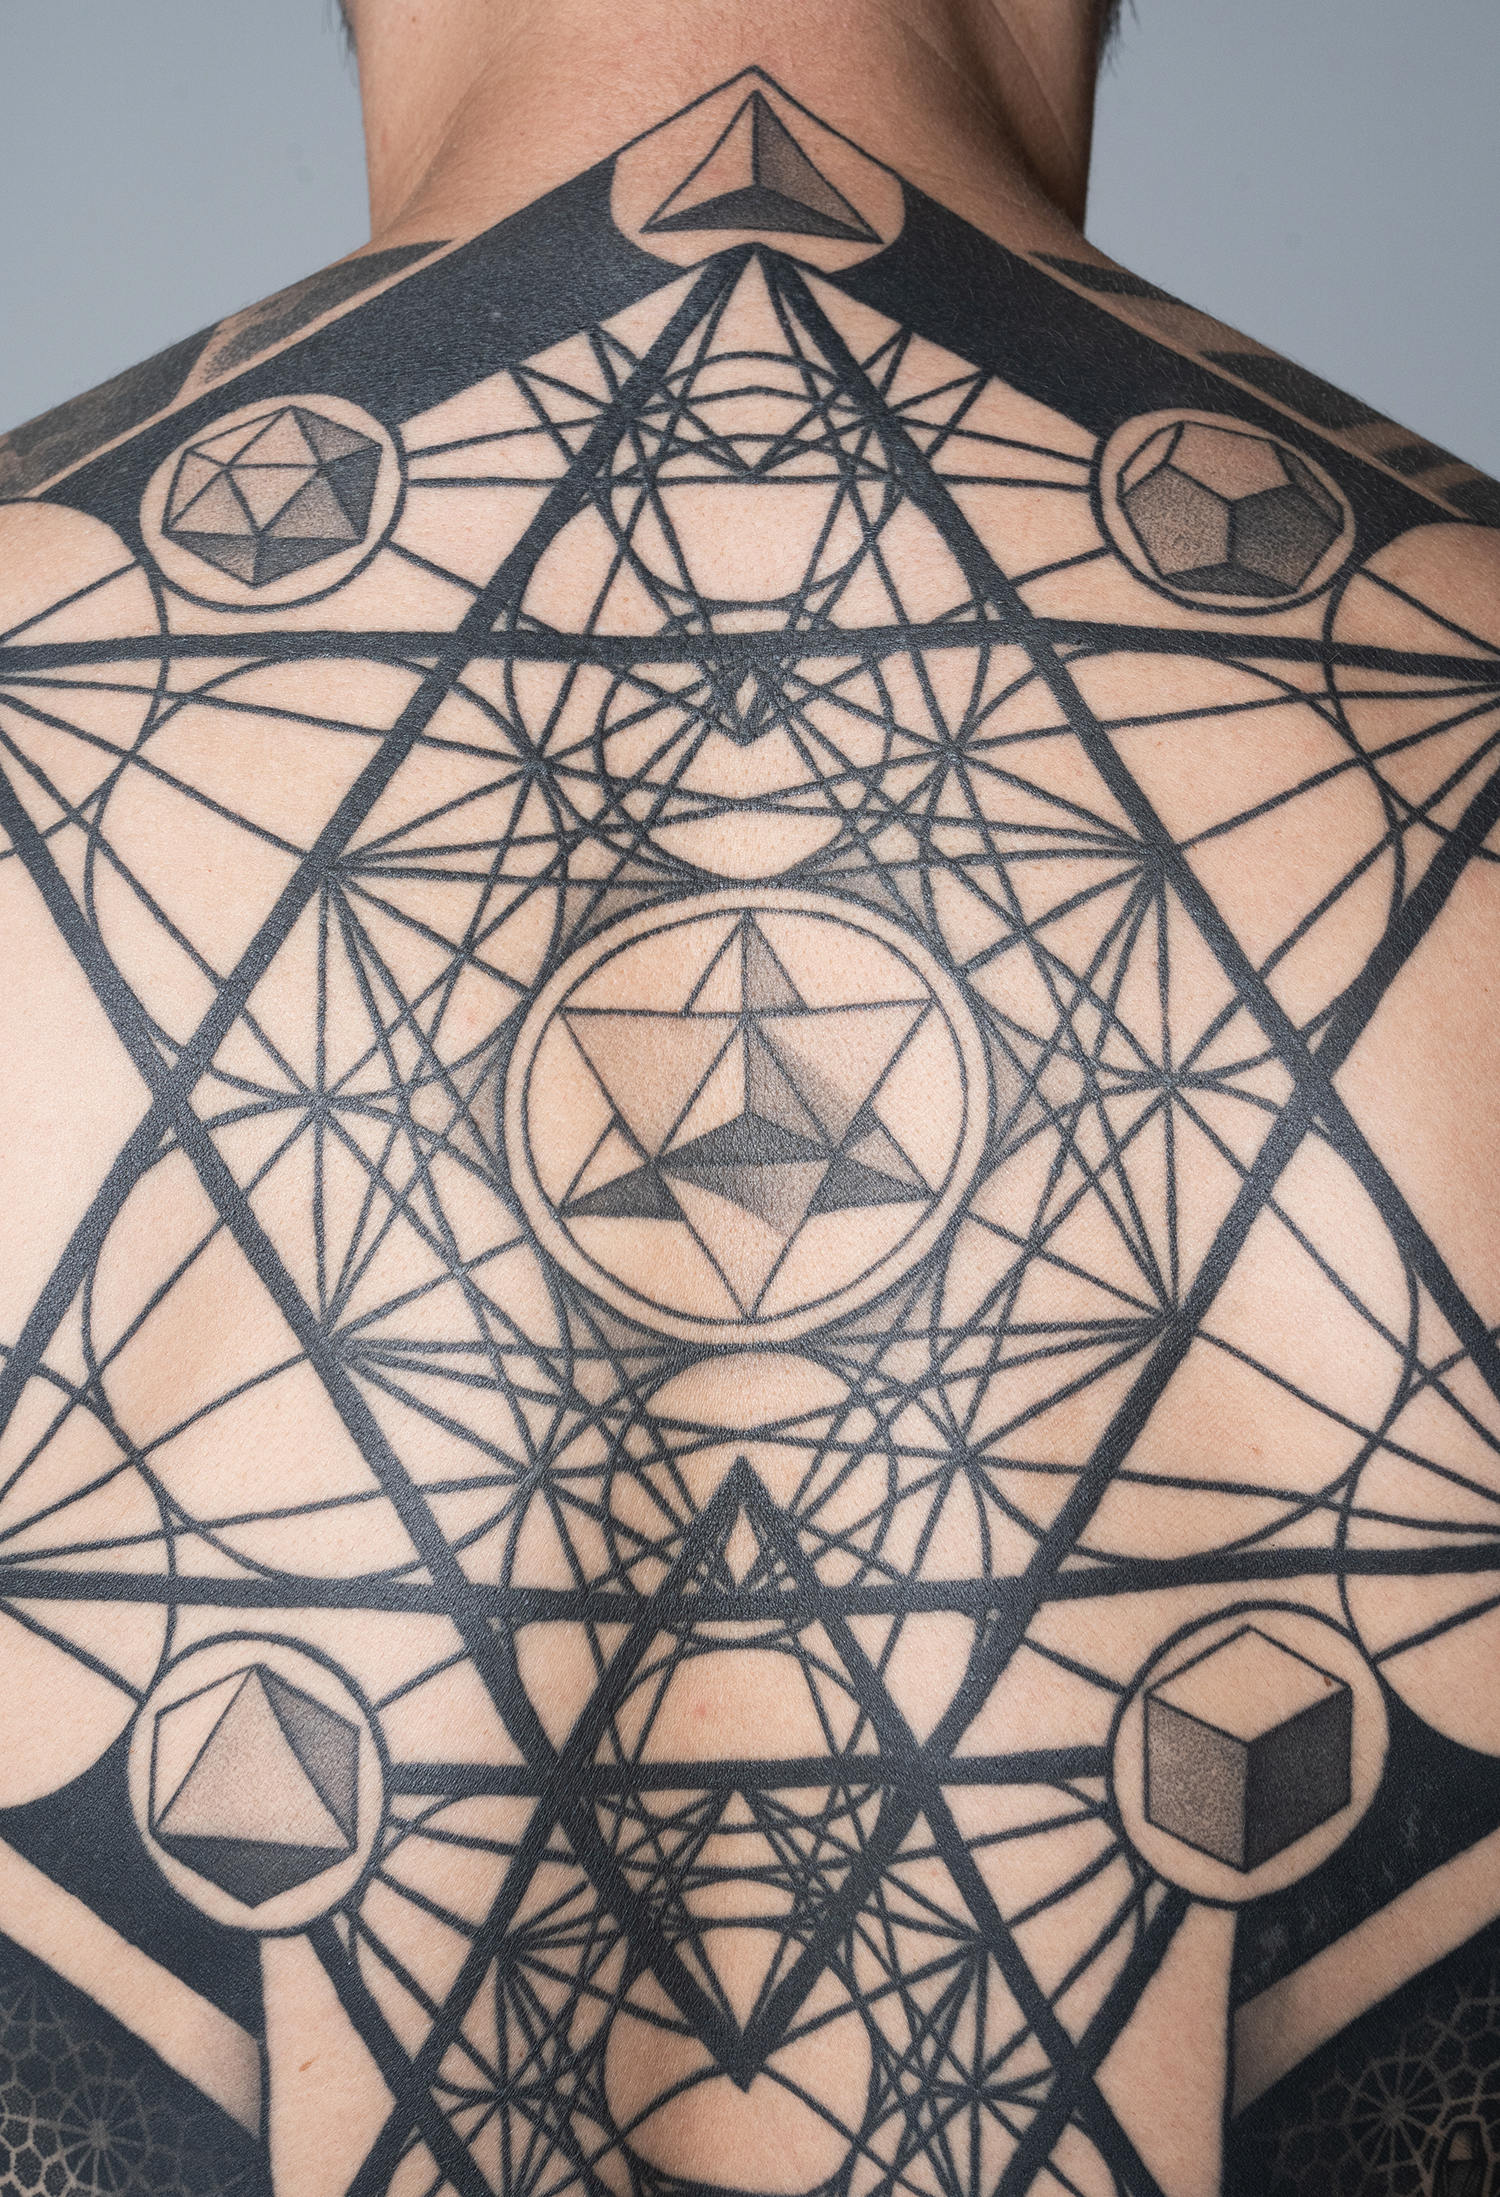 The intricate layering of geometric motifs on back tattoo